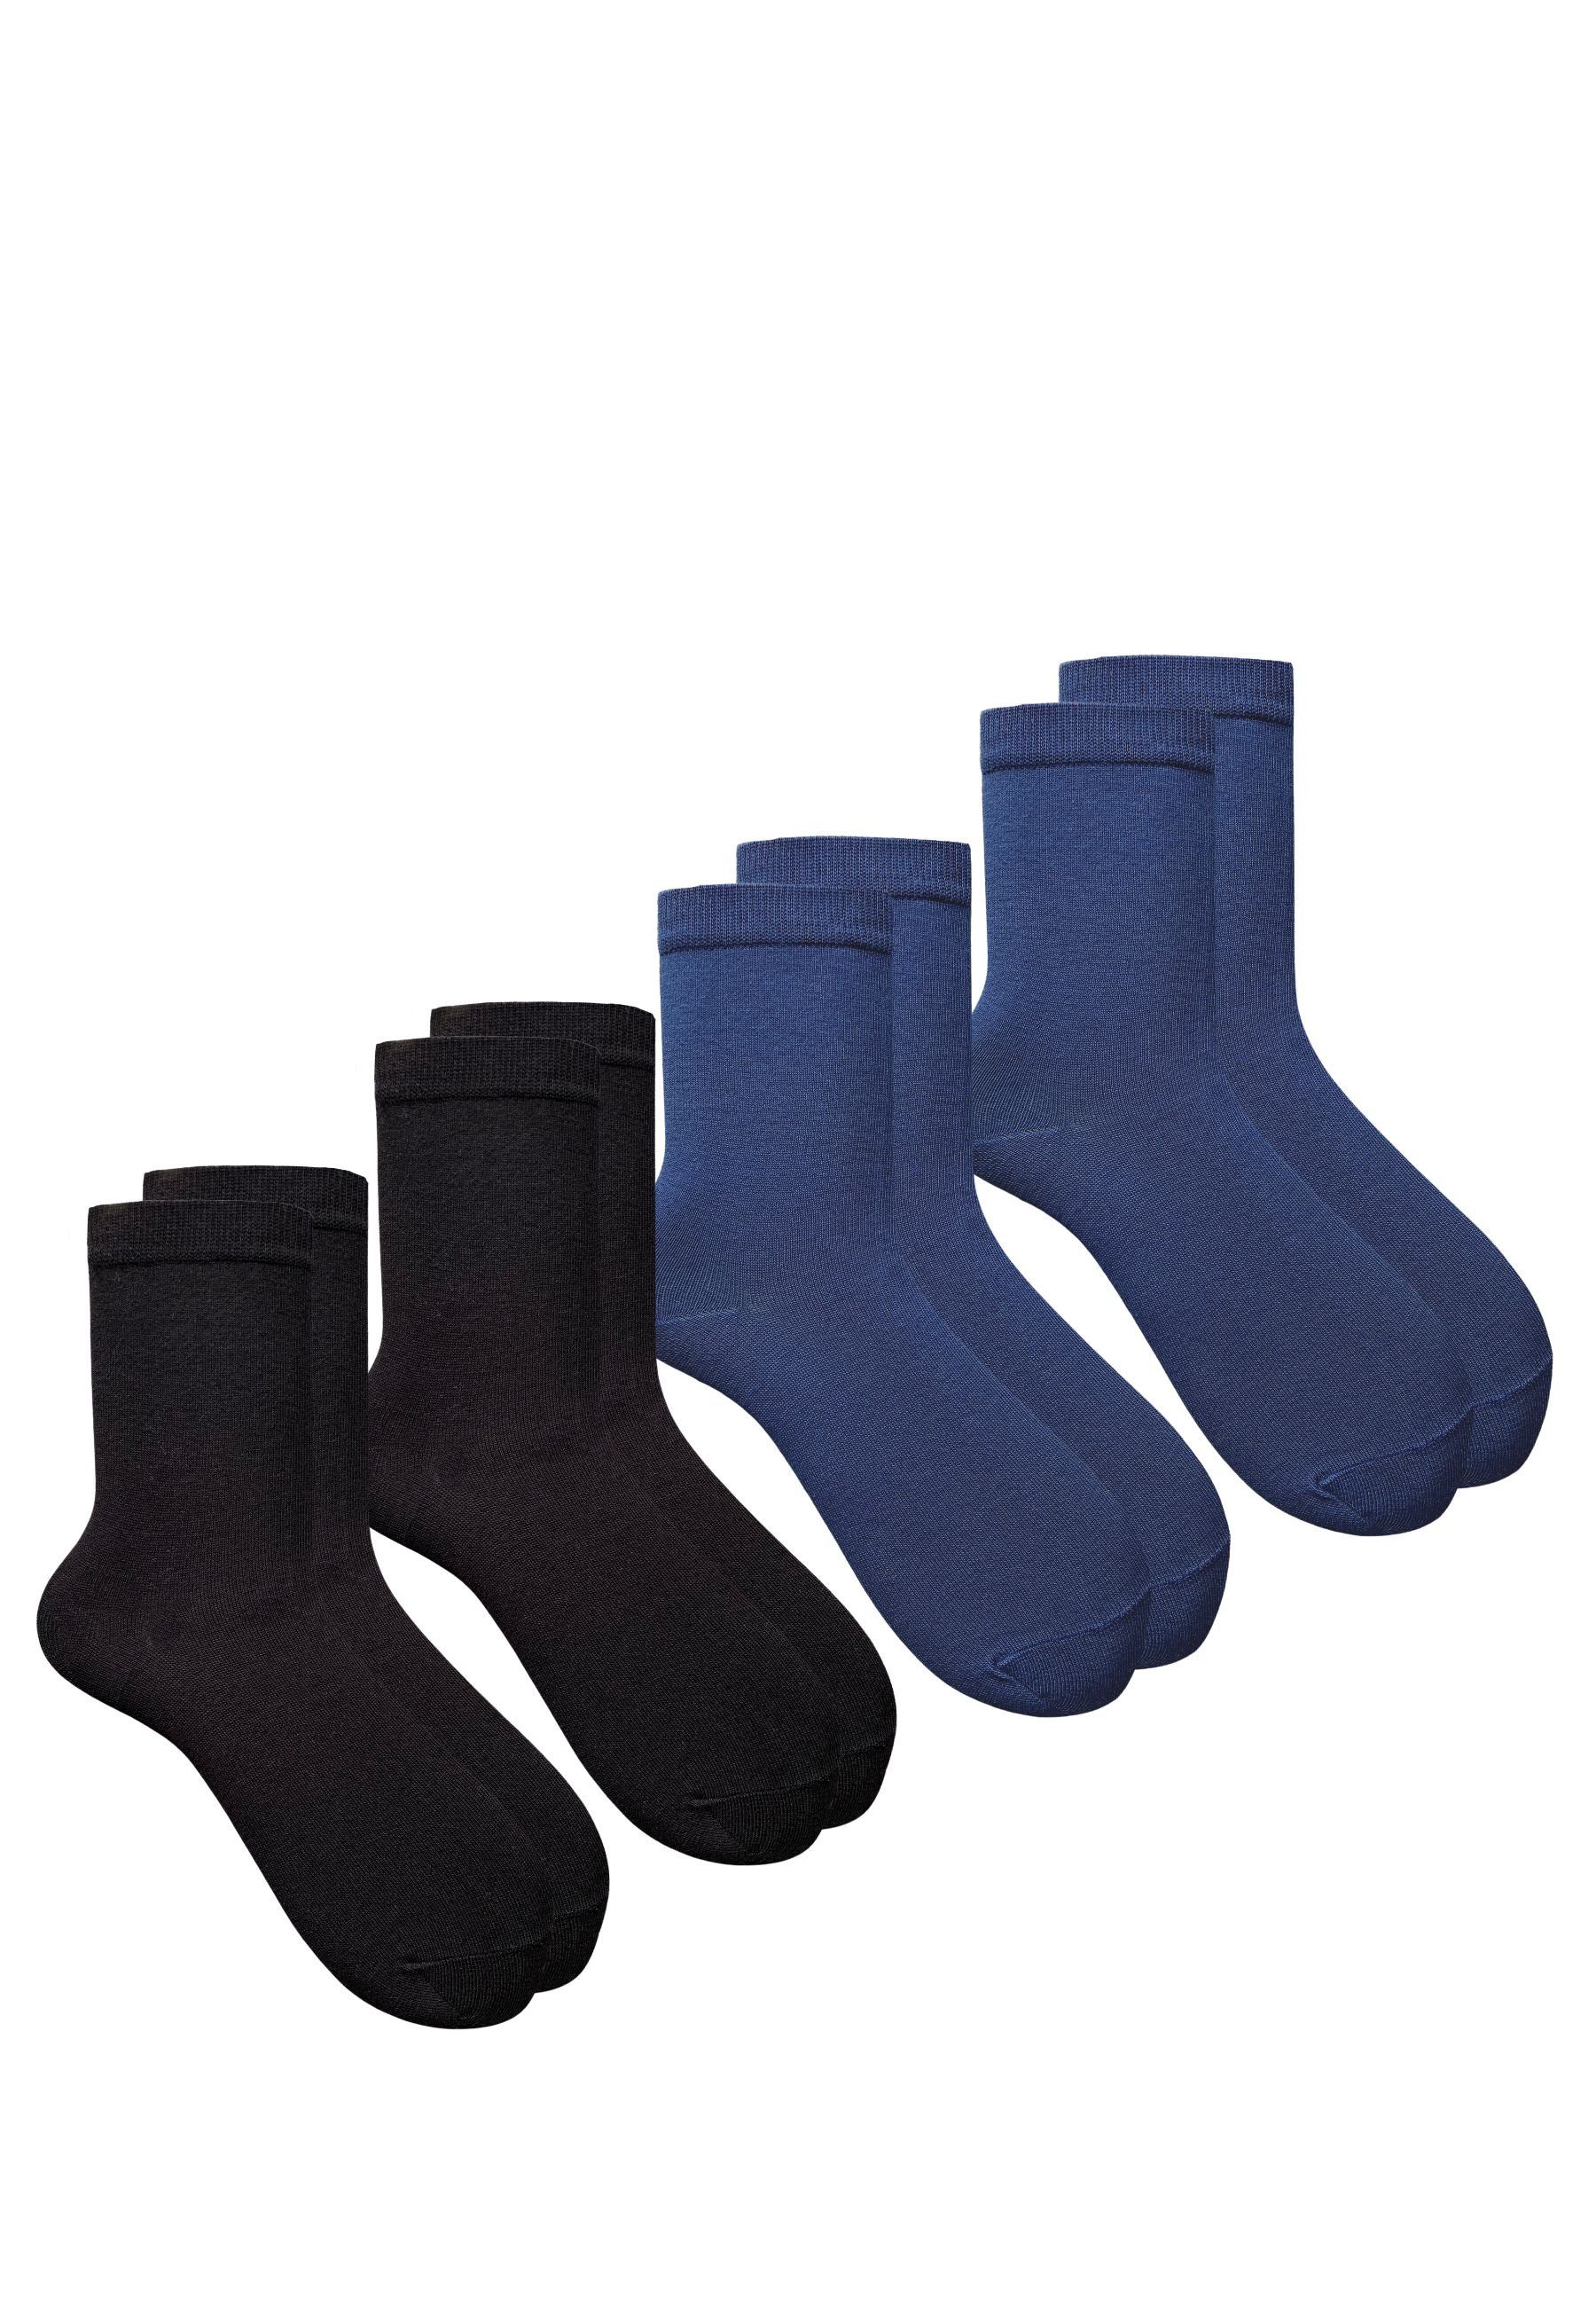 neue Produkte verkaufen HESE SOX Socken SOCKEN Bunt PAAR 5 NO.15 Basicsocken BAUMWOLLE